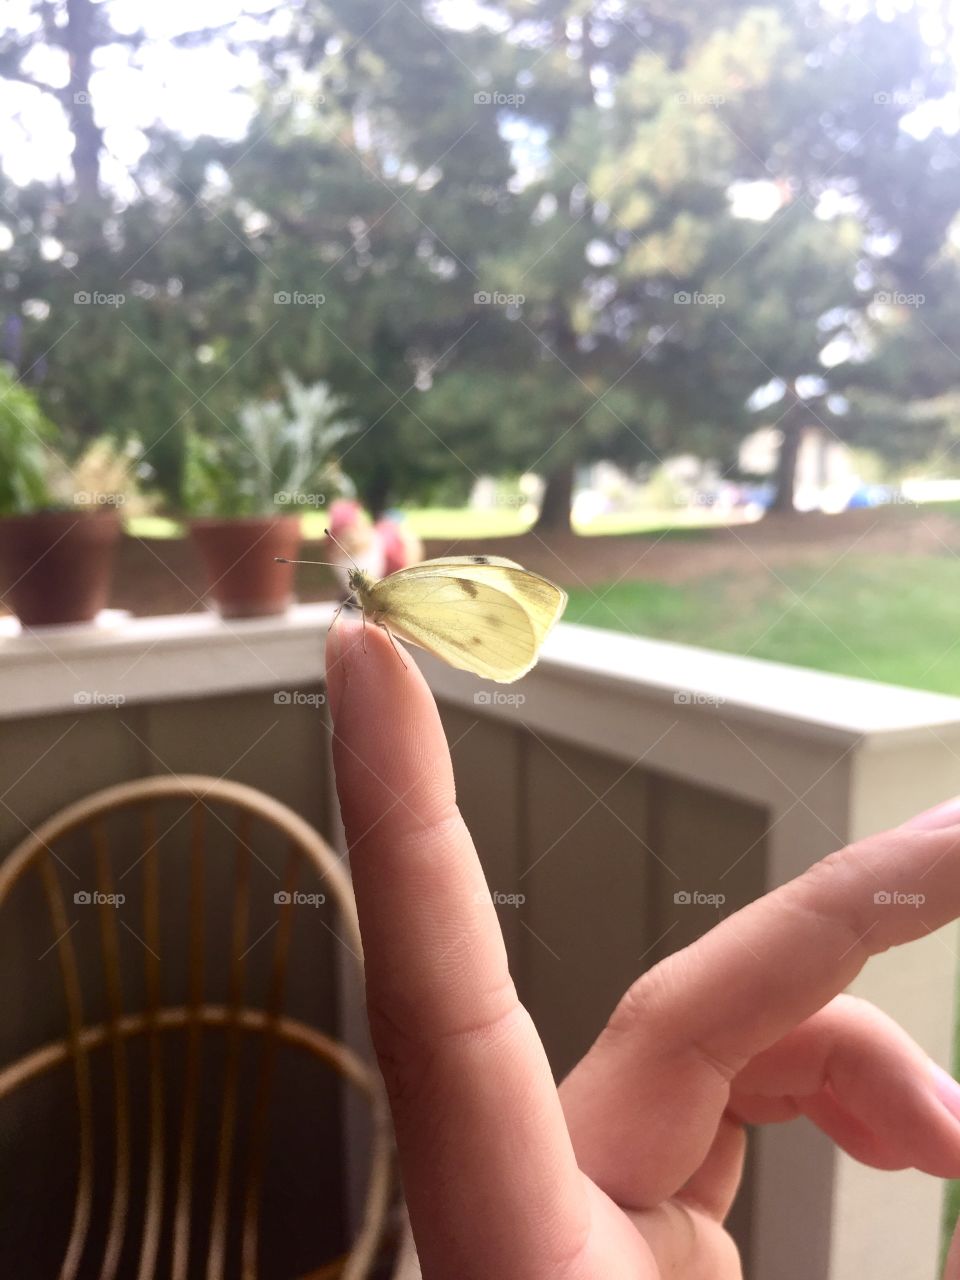 Butterfly on finger